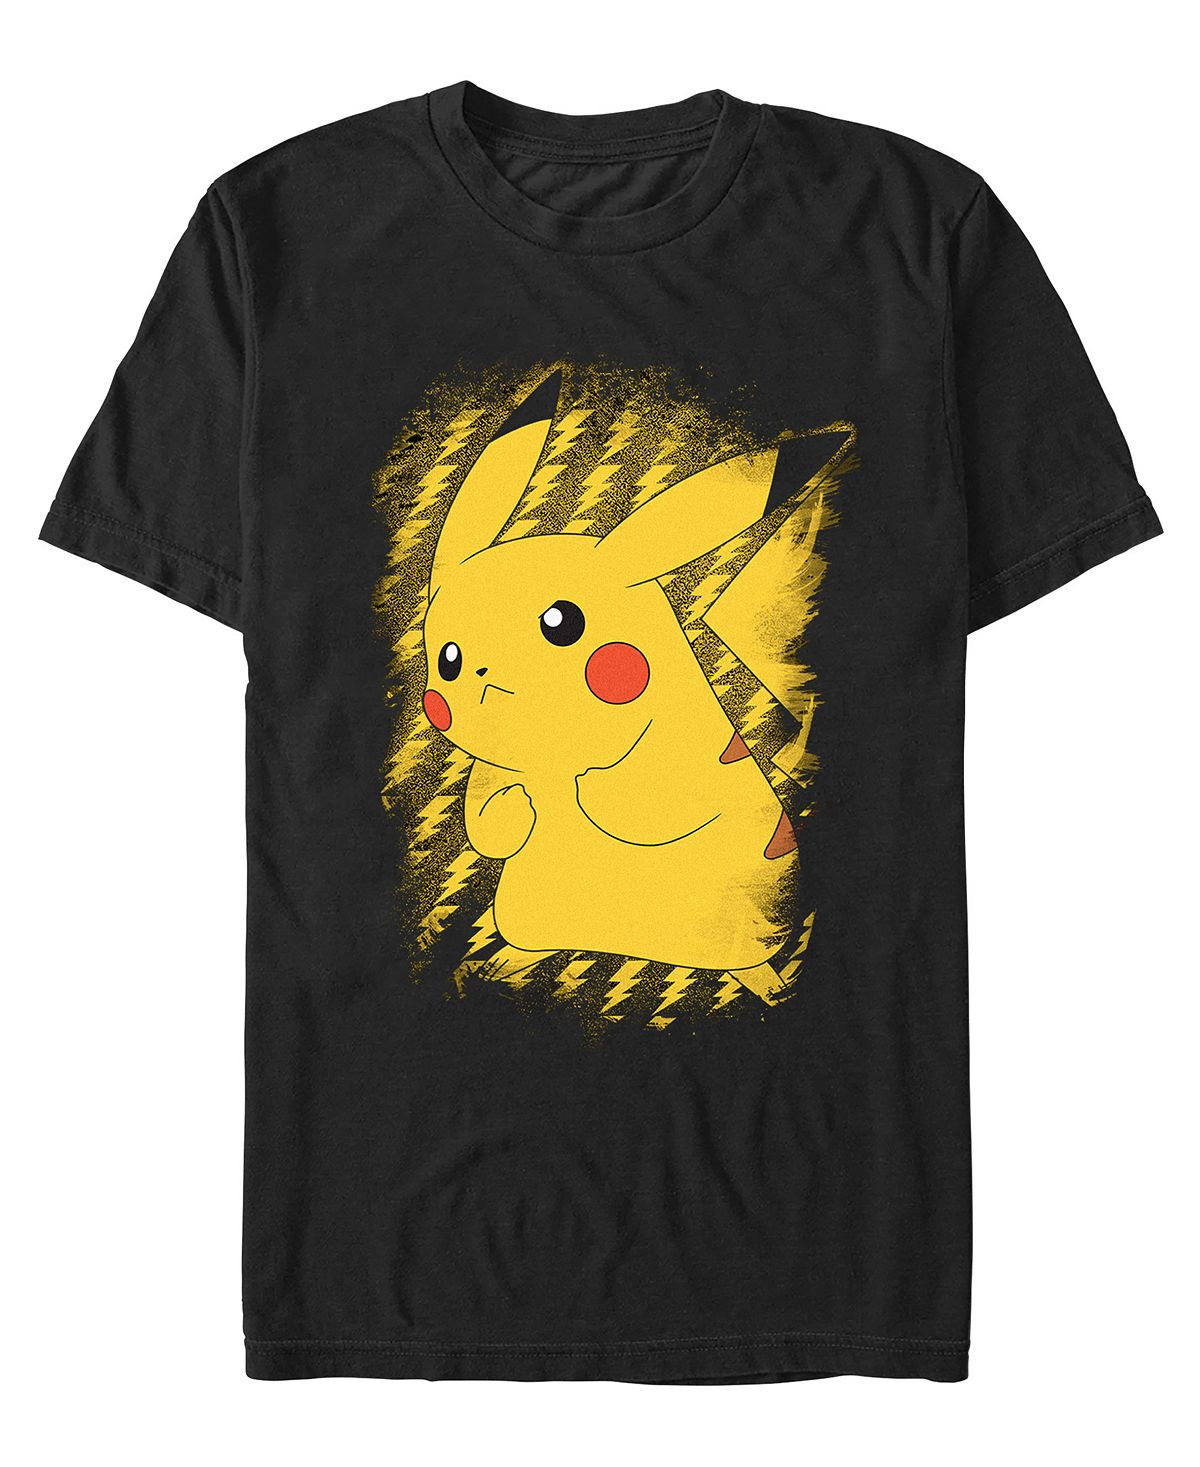 Мужская футболка с коротким рукавом Pikachu Brushy Fifth Sun мужская футболка с коротким рукавом batman haha clown fifth sun